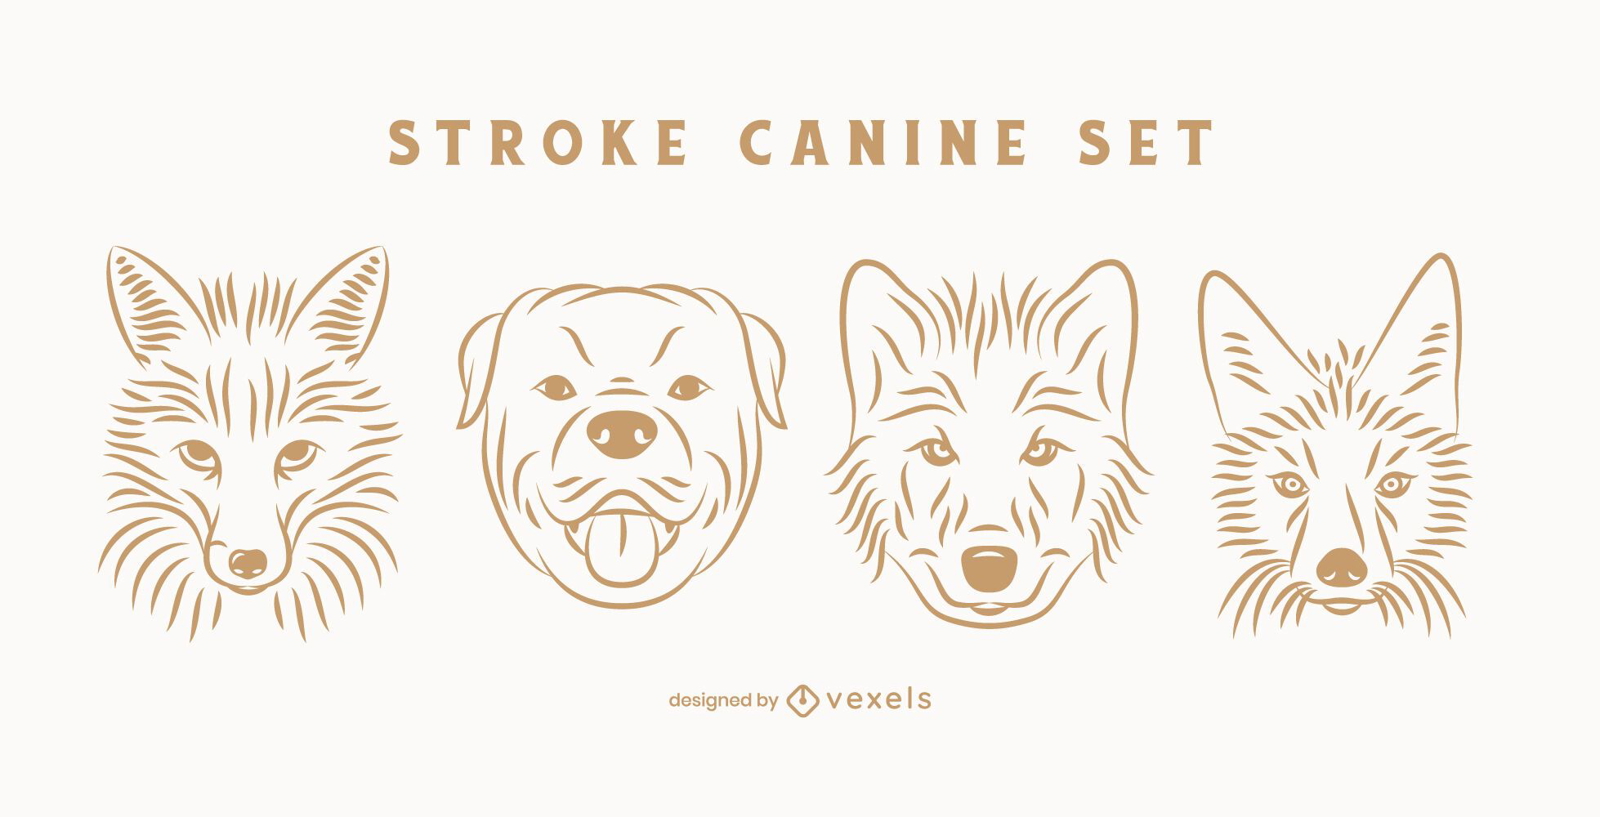 Stroke canine set 